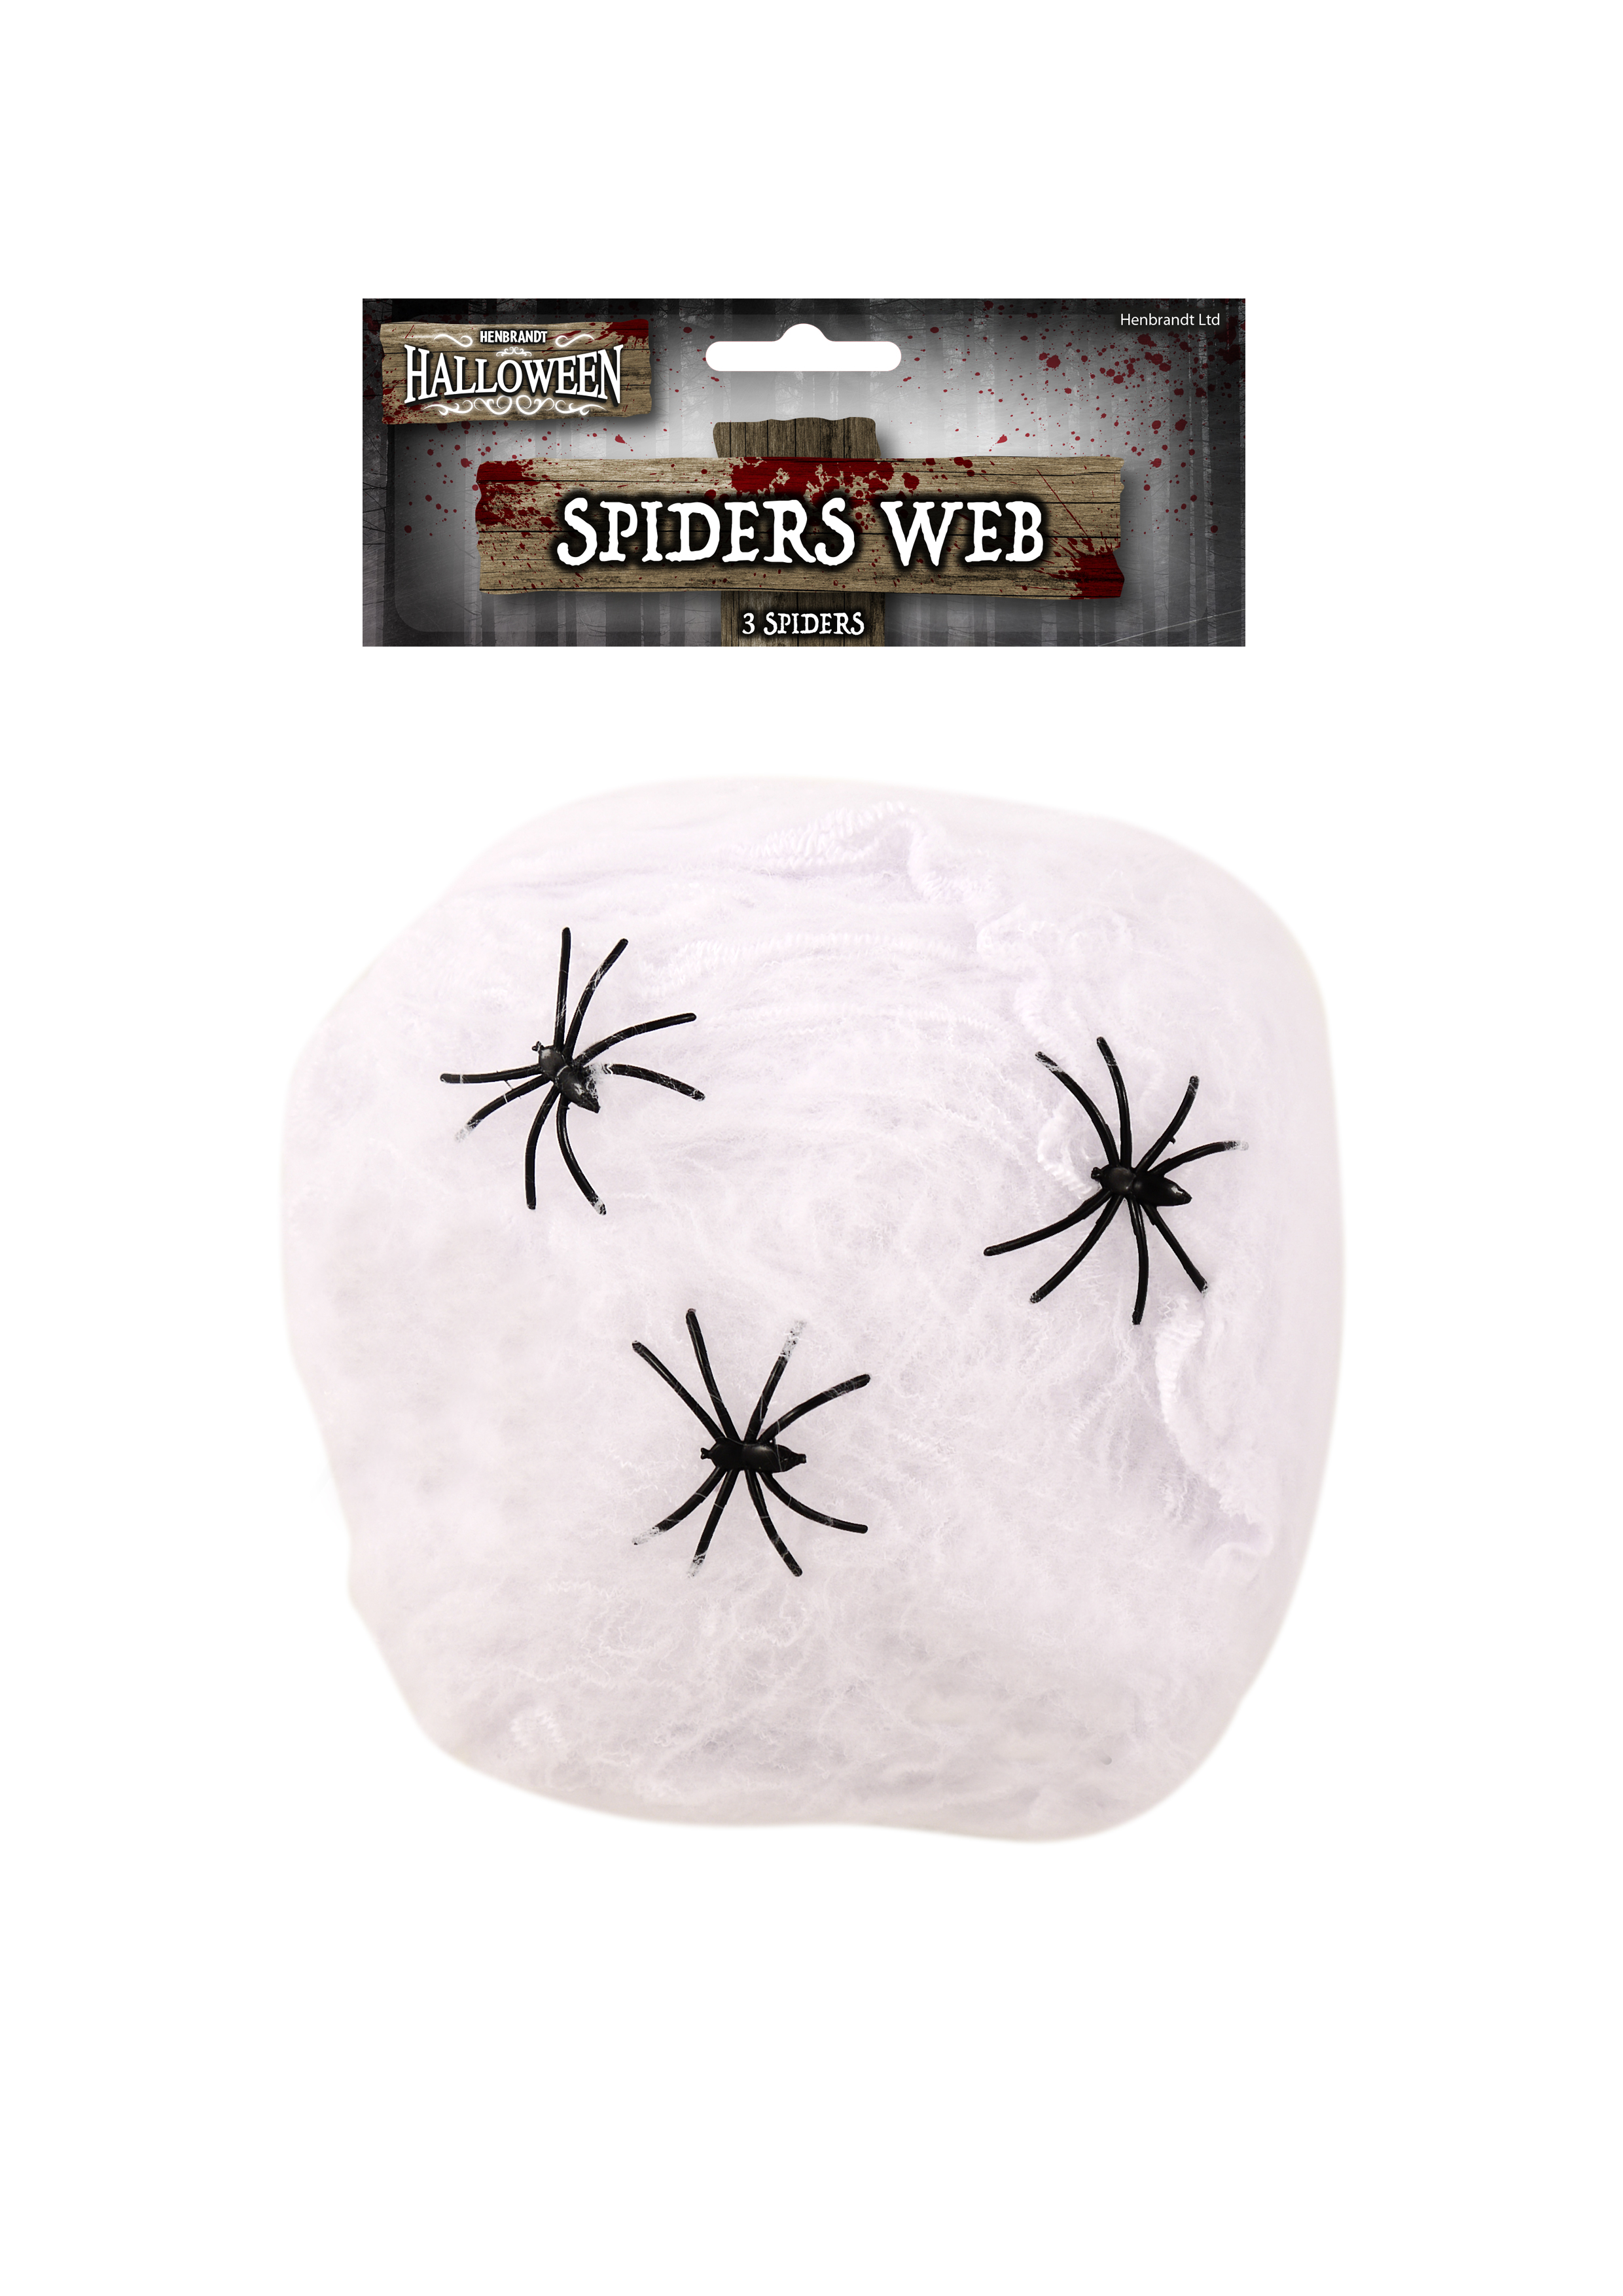 White Spider's Web with 3 Spiders (20g) : Henbrandt Ltd